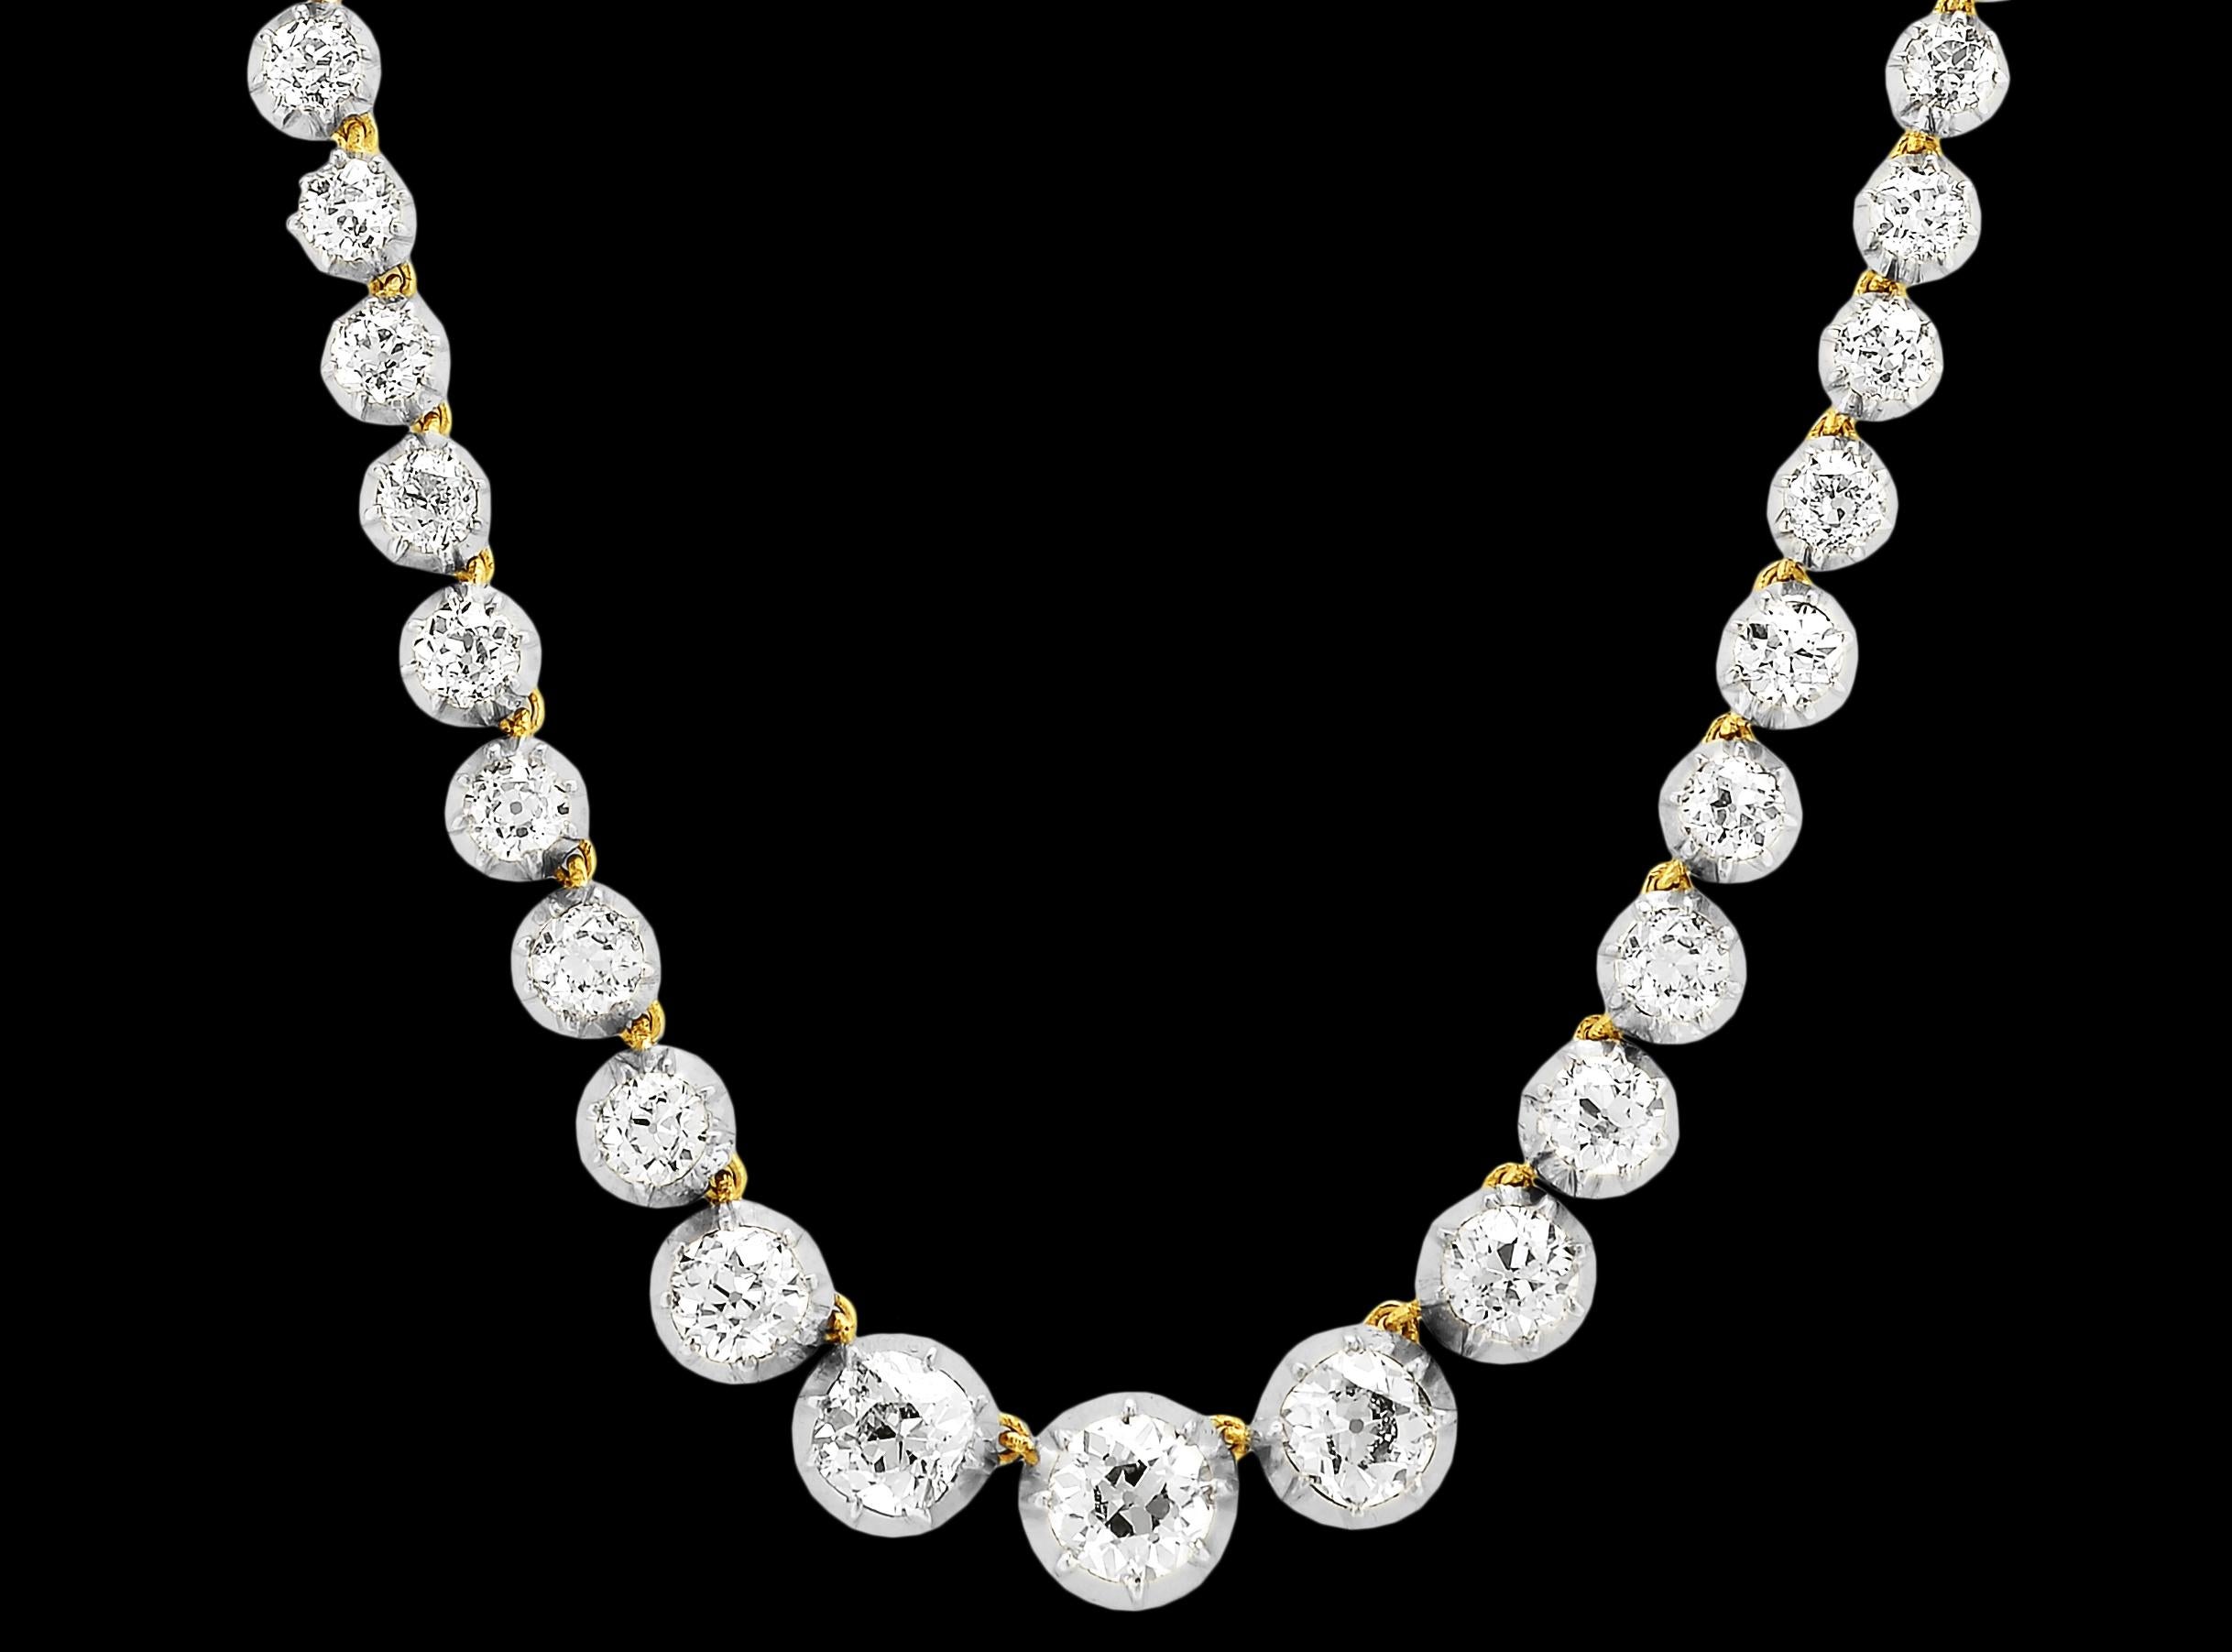 Women's Antique Victorian Riviere, Single Strand Old European Cut Diamond Necklace/Tiara